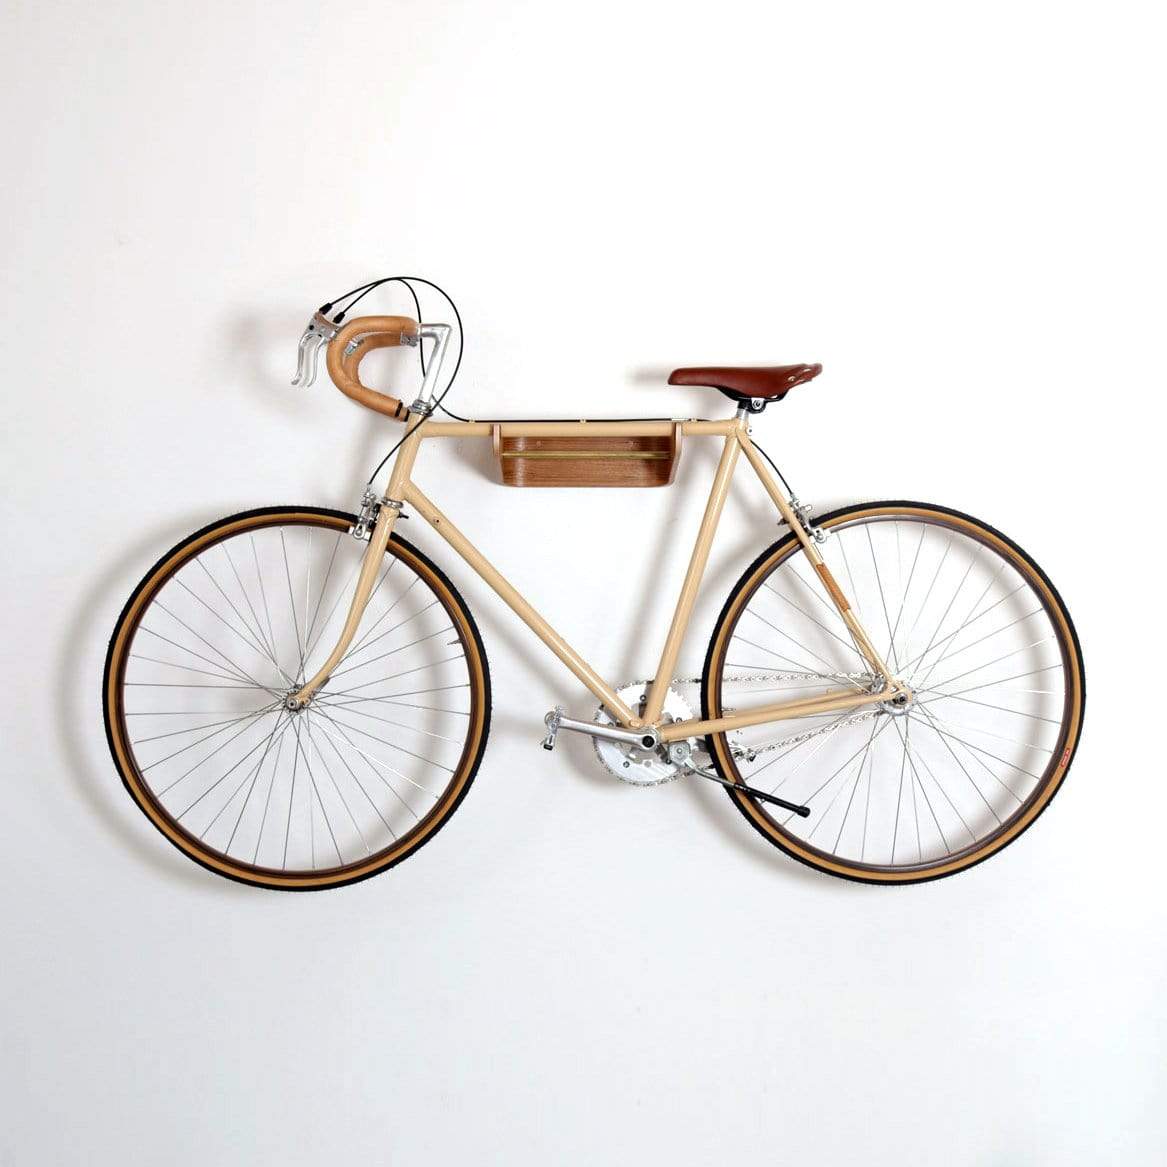 A bike hanging on a wooden bike hook on a wall